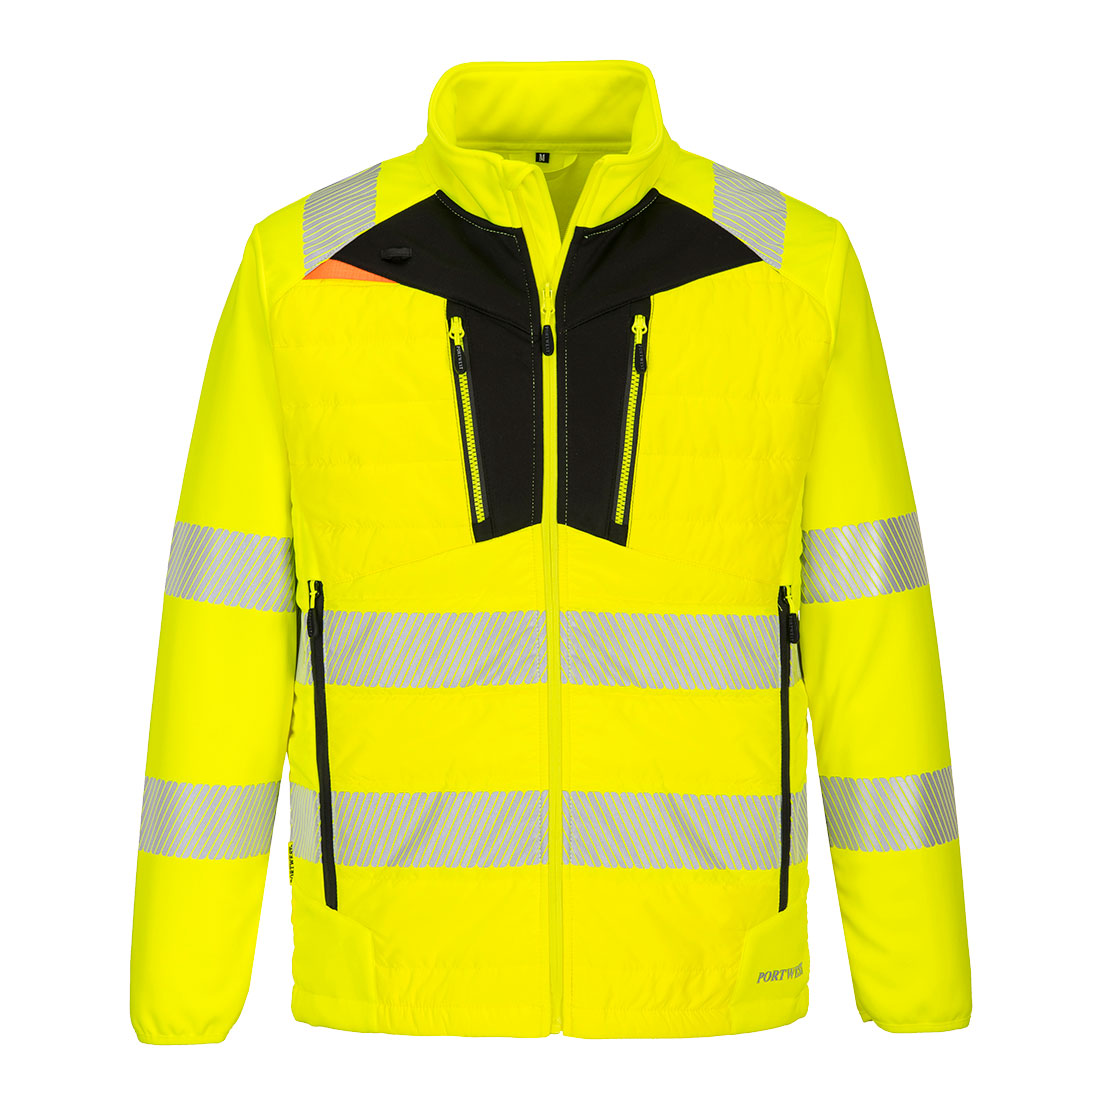 DX4 Hi-Vis Hybrid Baffle Jacket - Yellow/Black